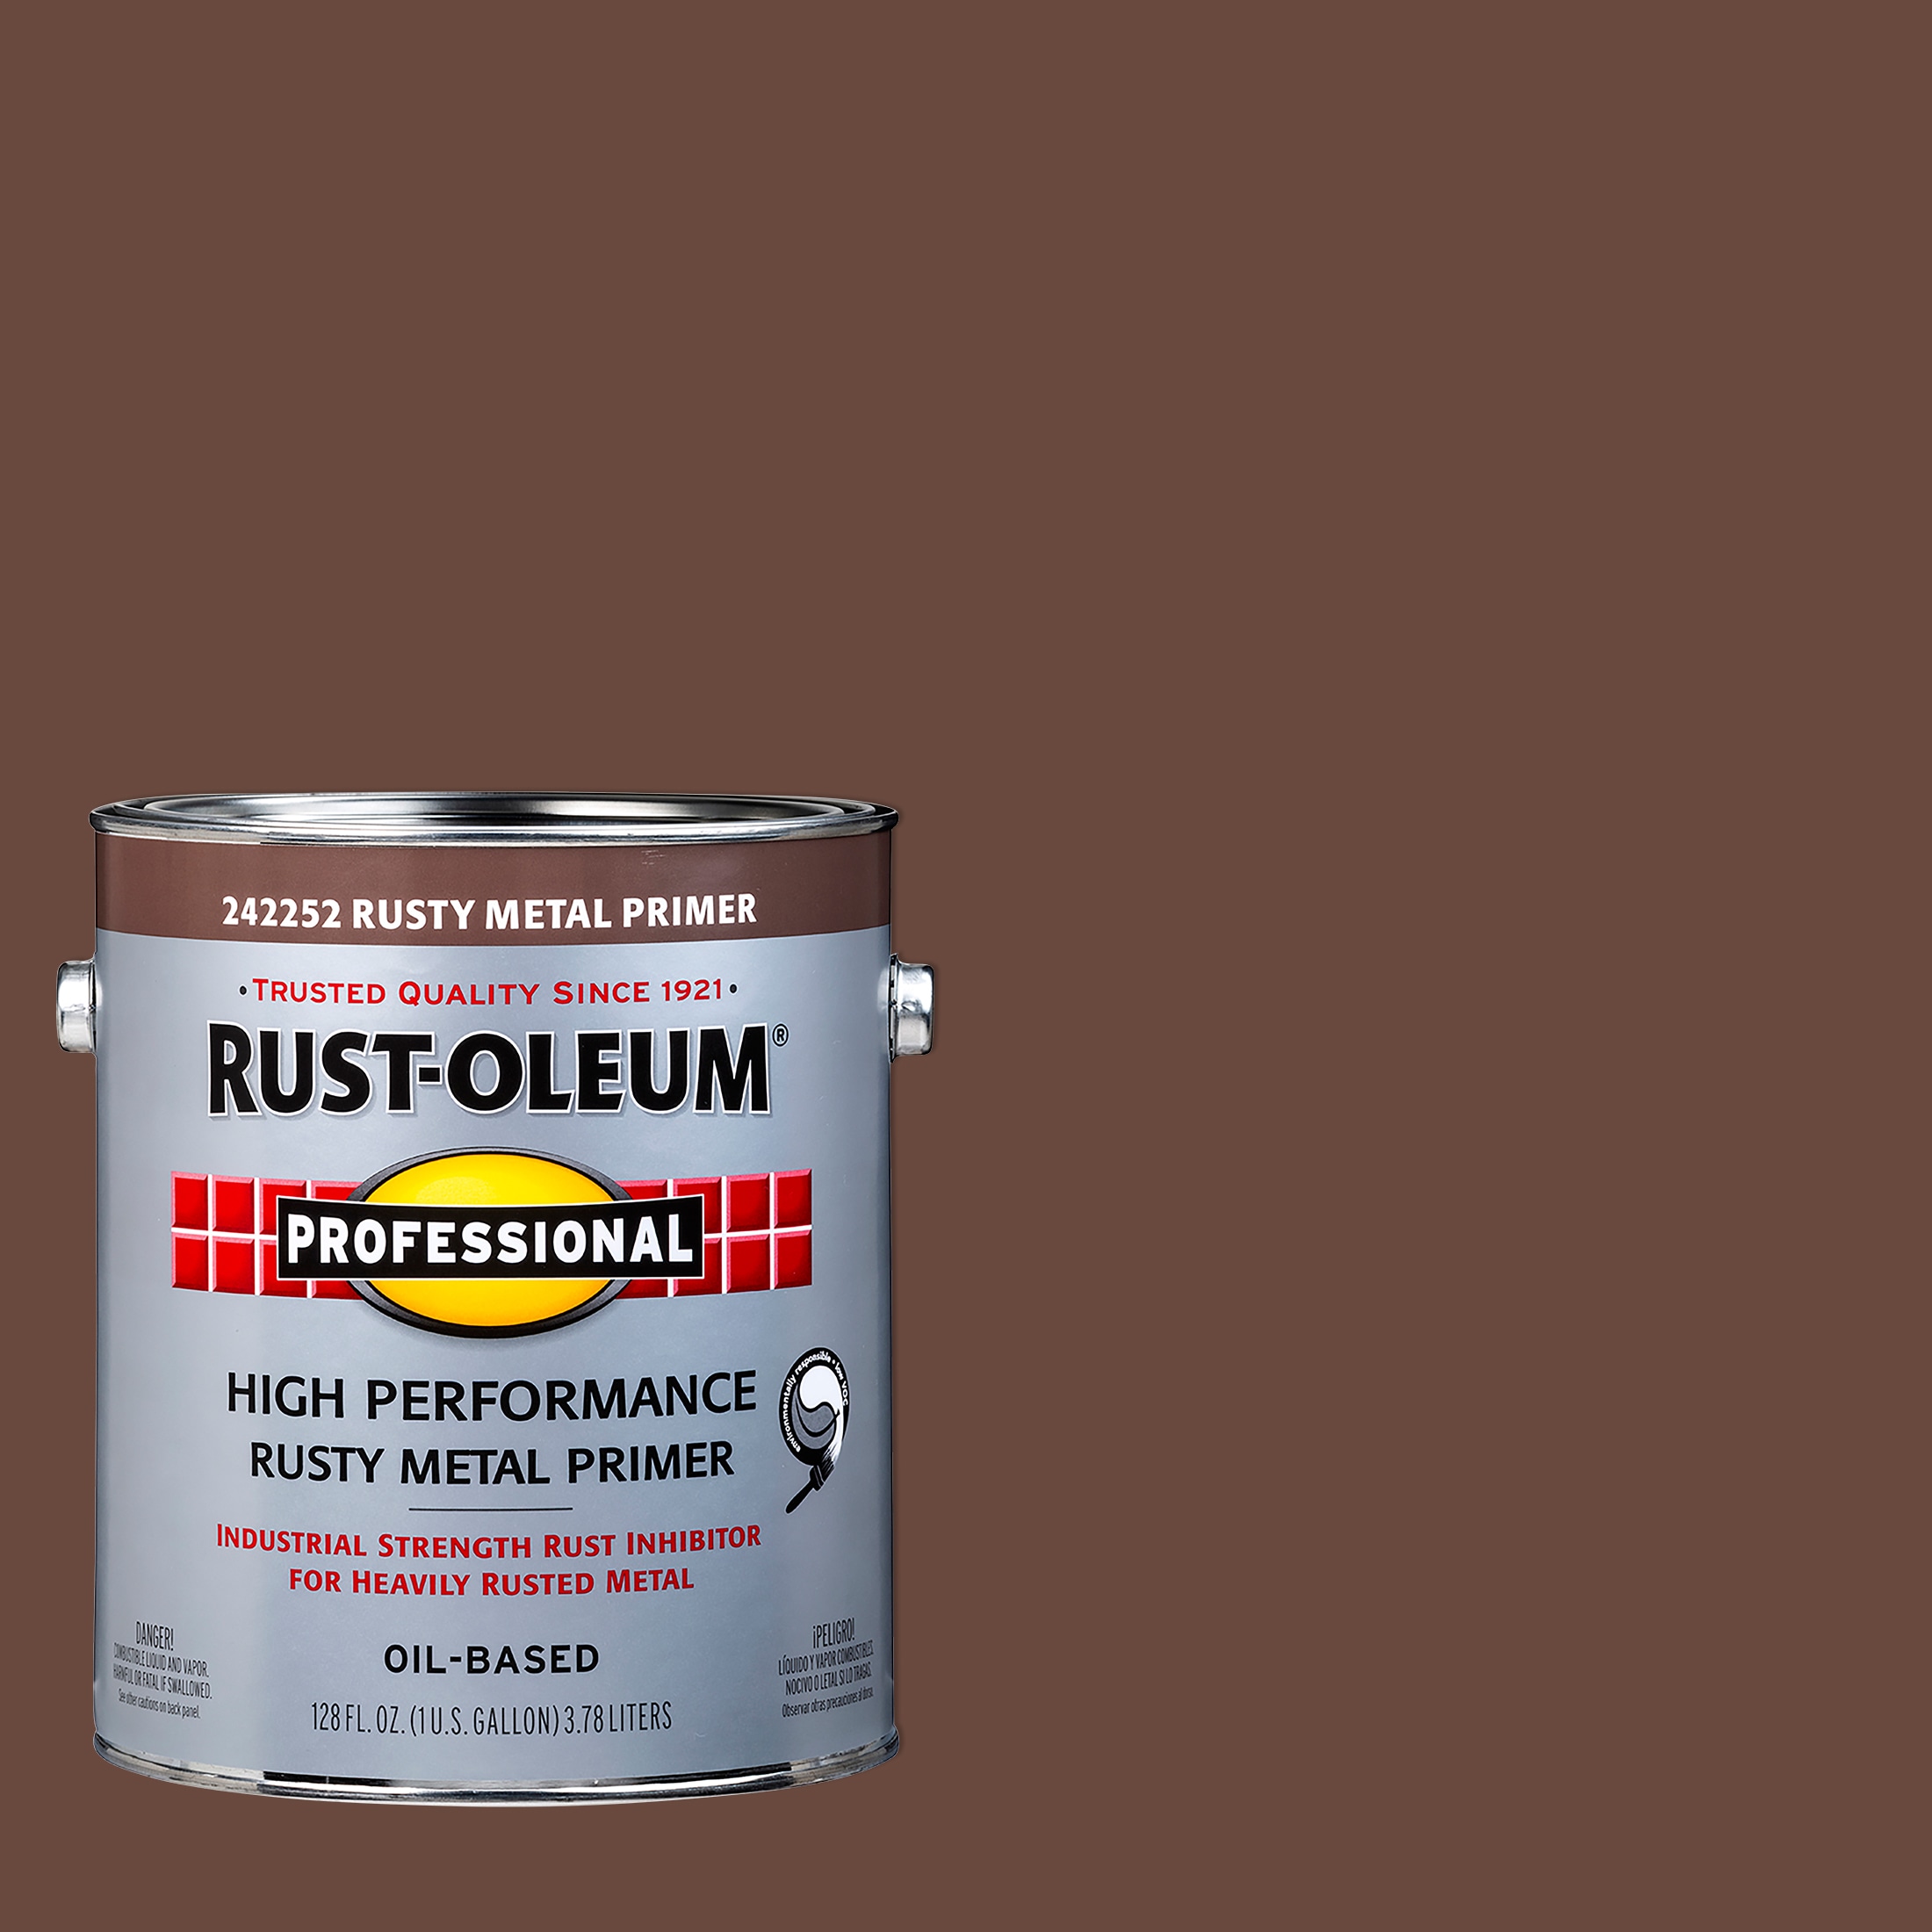 Feronite Rusty Metal Primer. Rust stopper. Rust Converter and